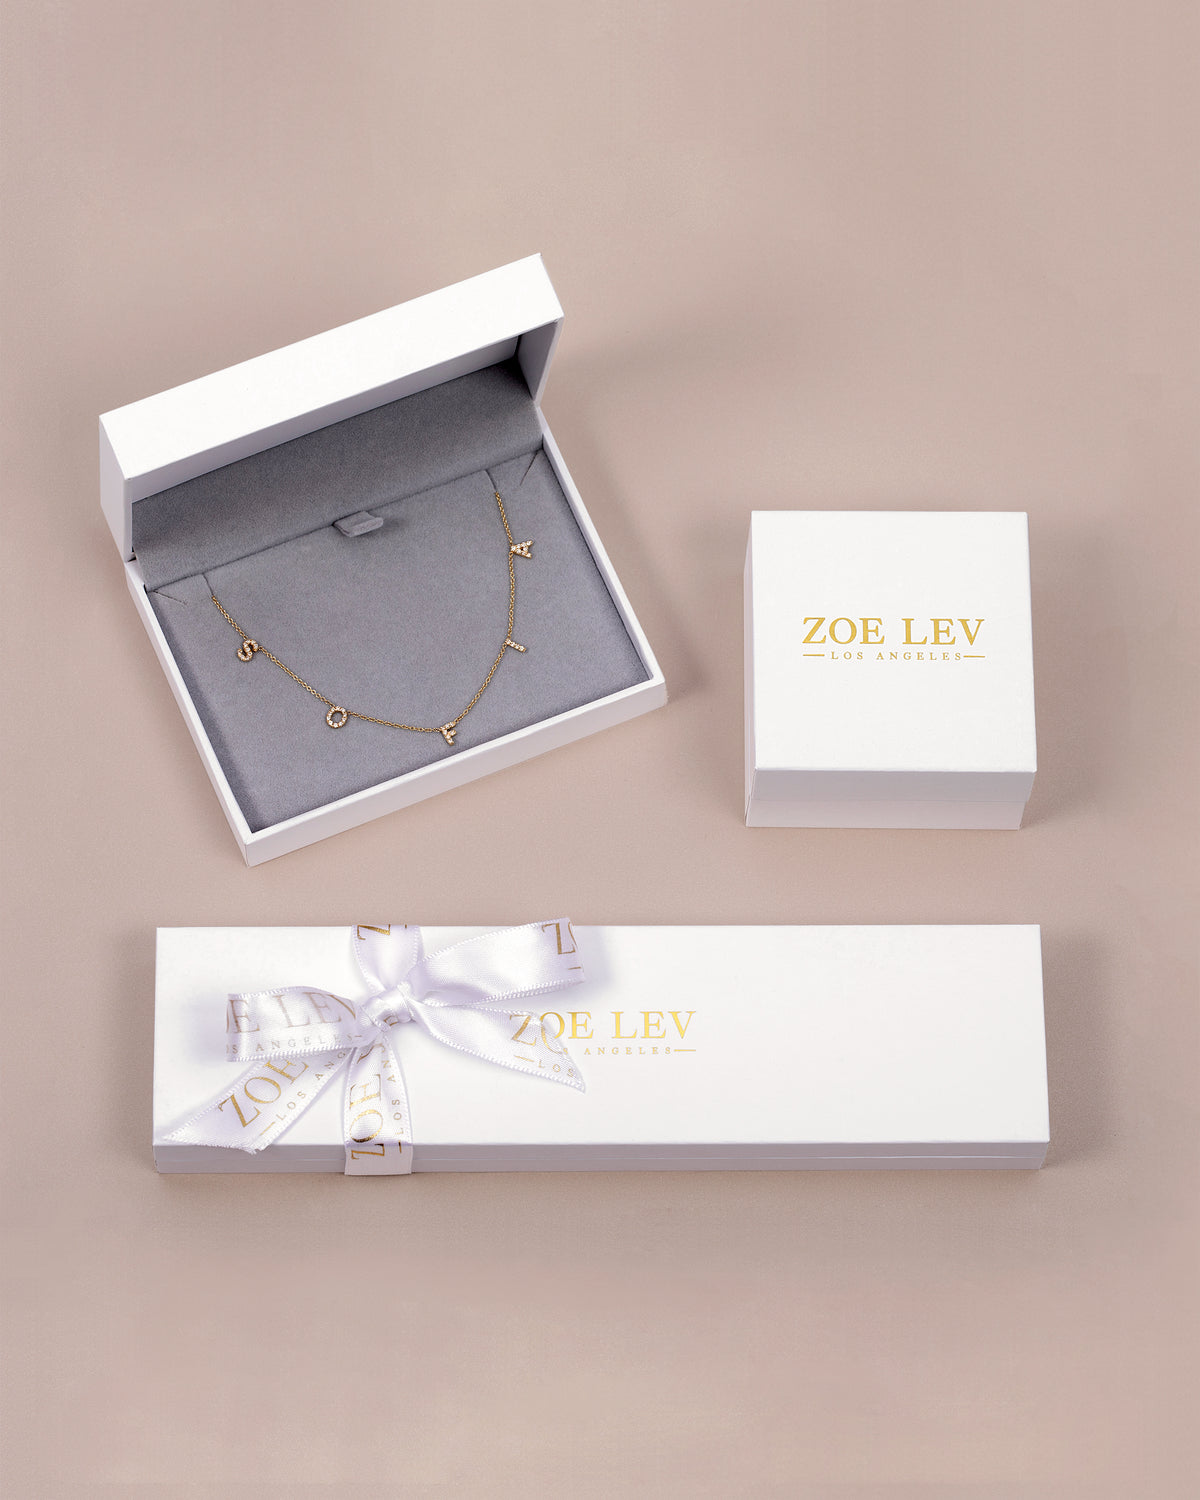 14k Gold Bezel Diamond Lariat Necklace